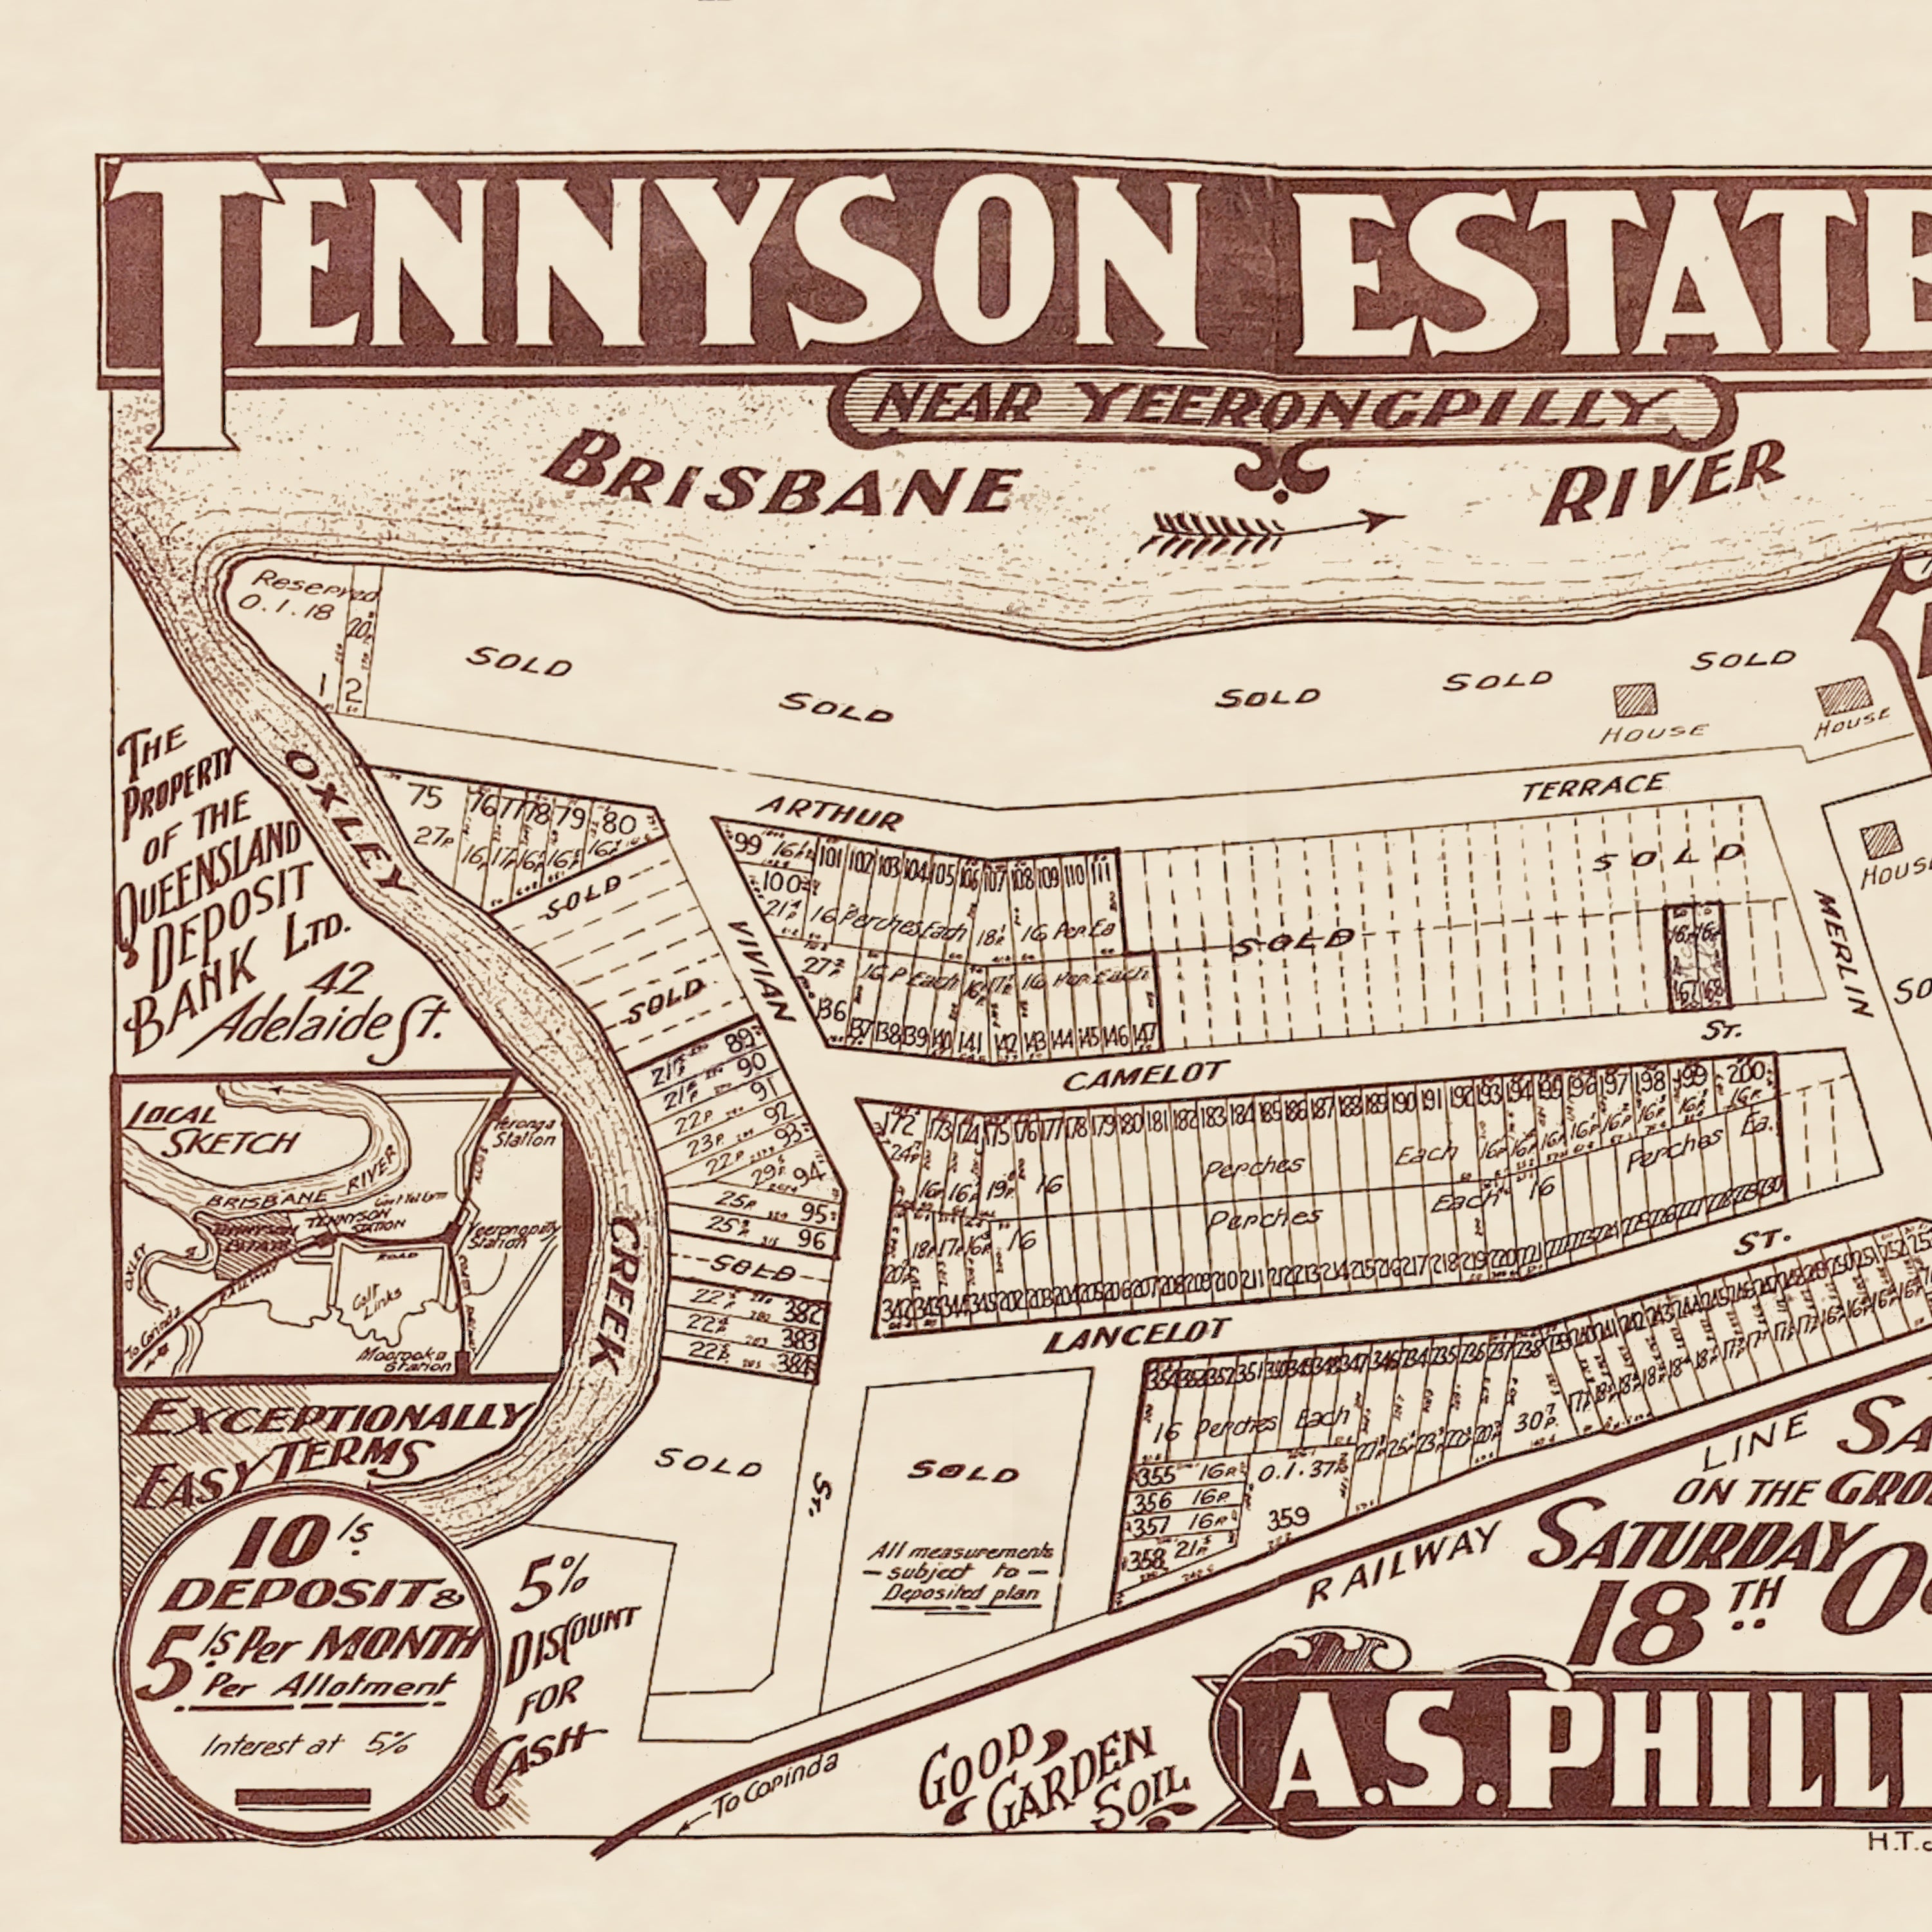 1919 Tennyson - Tennyson Estate